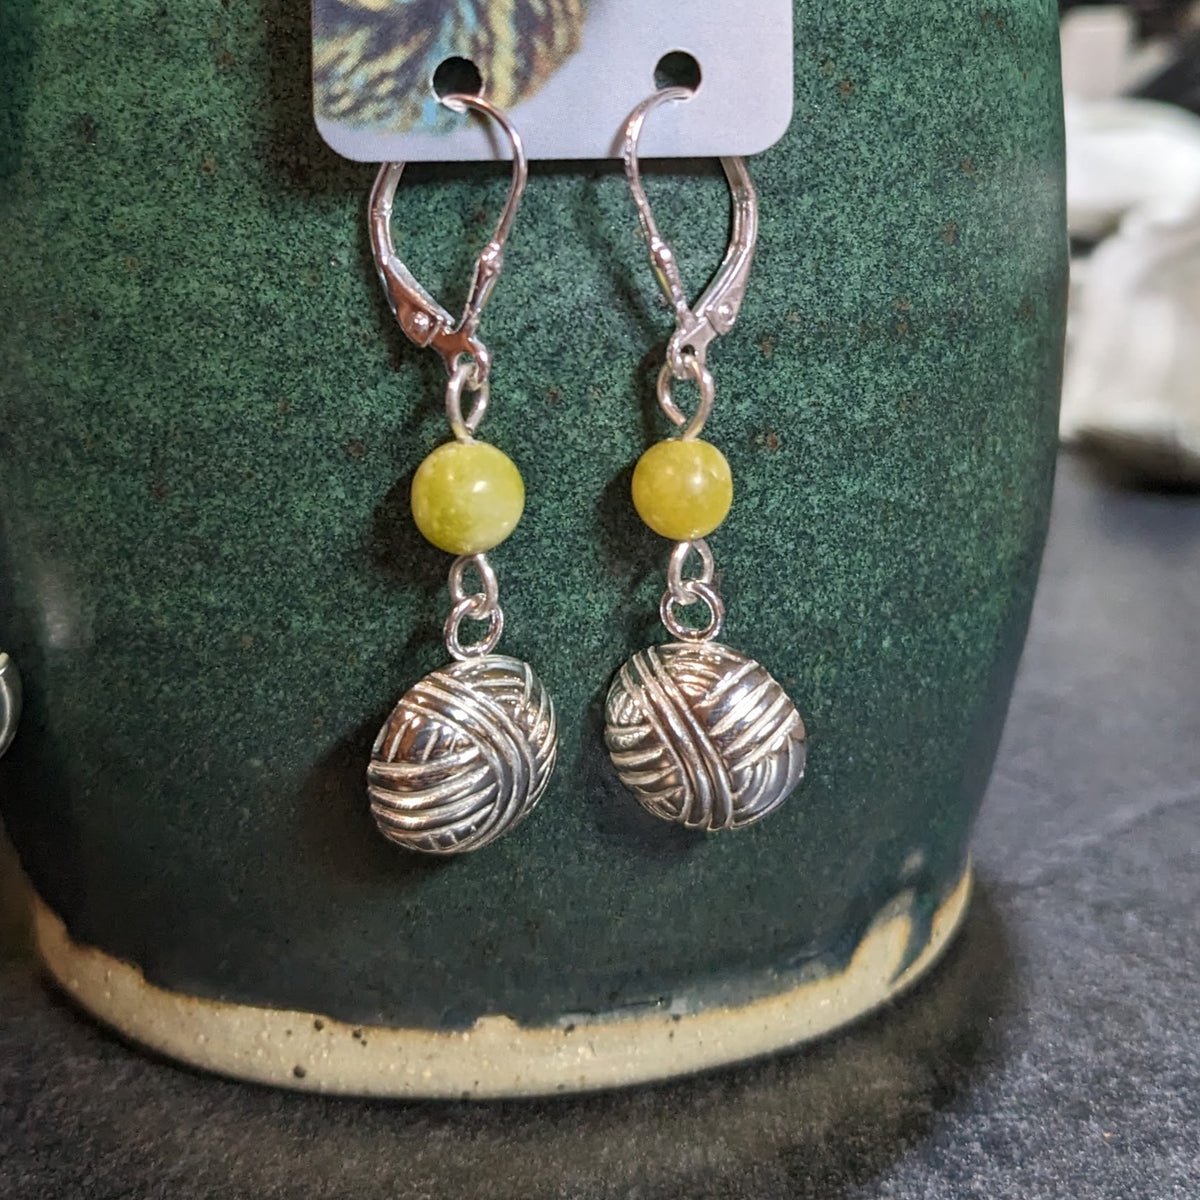 Yarn Ball Earrings - Silver with beads